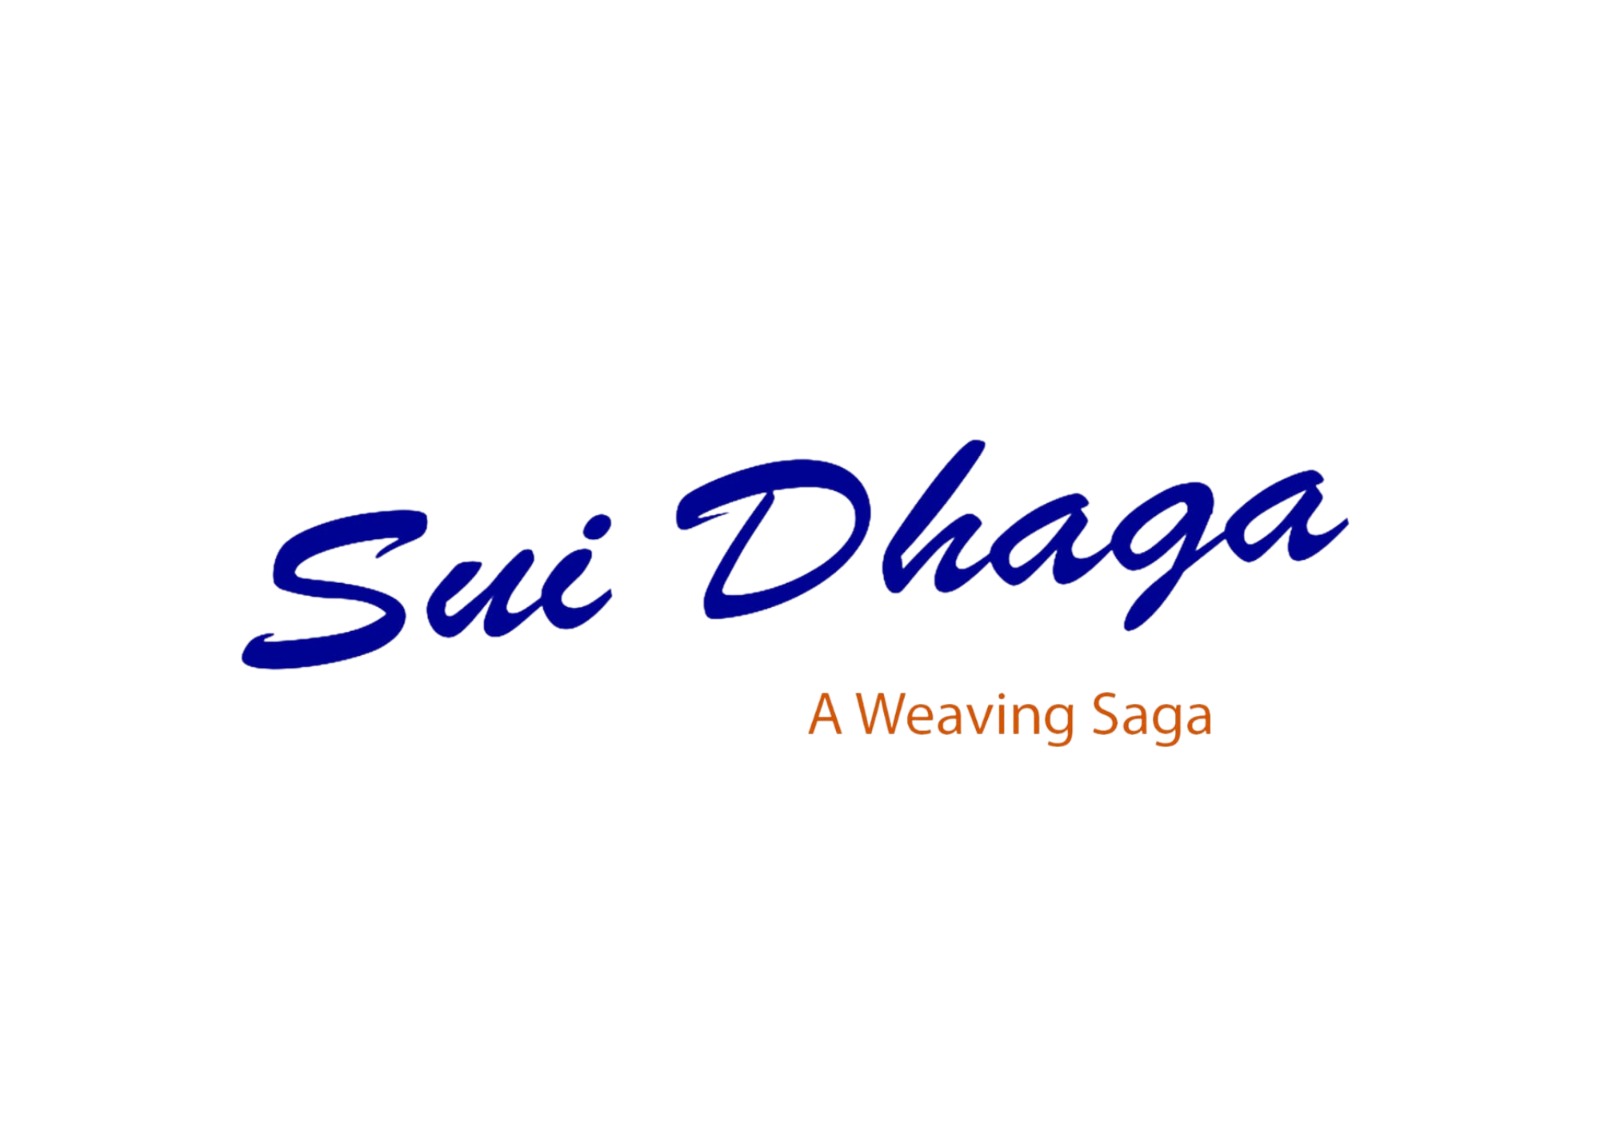 Sui Dhaga - A Weaving Saga: Celebrating Indian Heritage and Entrepreneurial Journey.